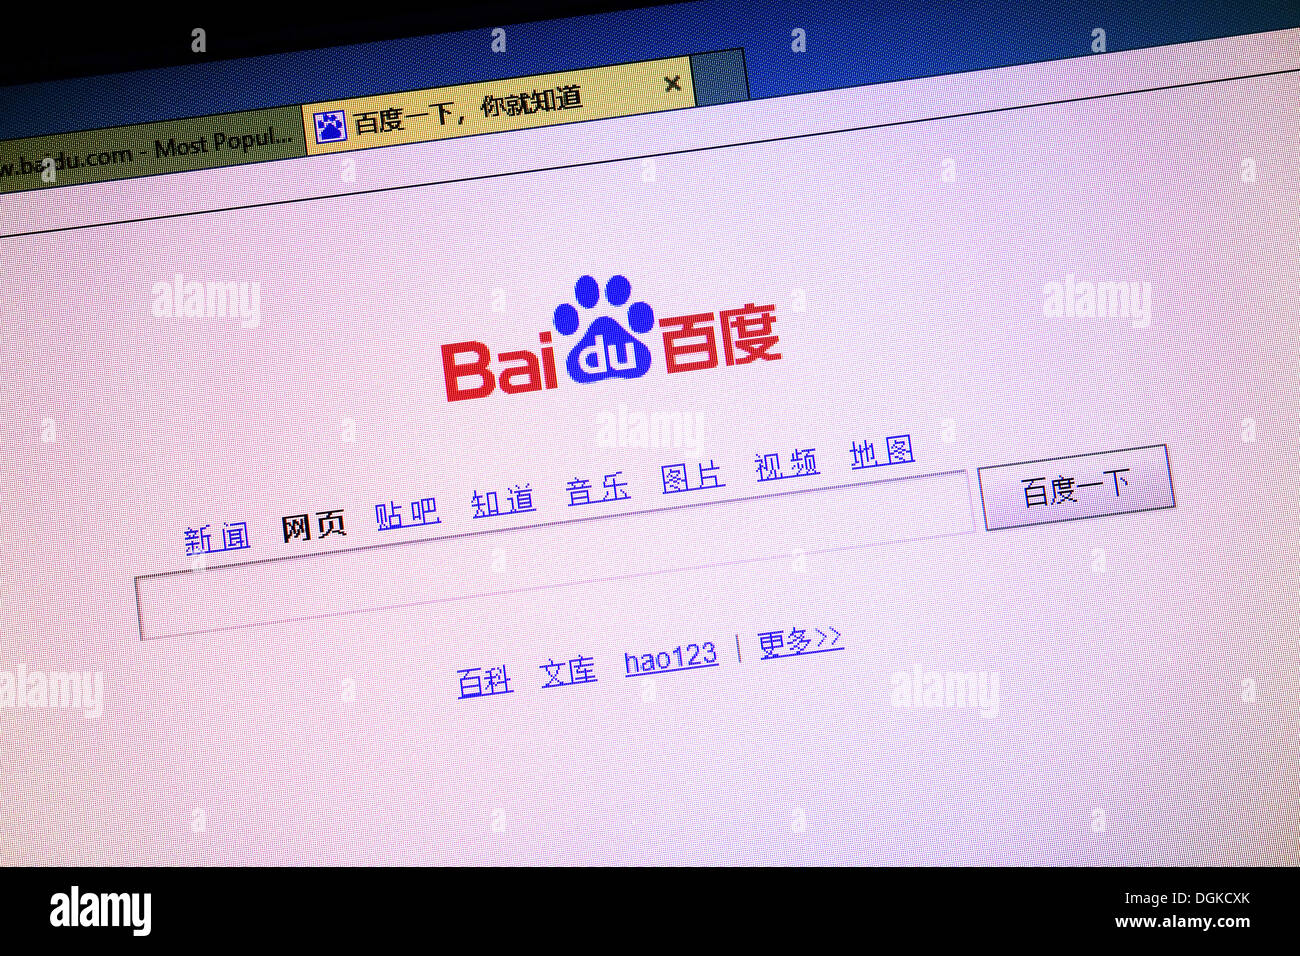 Baidu internet search engine Stock Photo